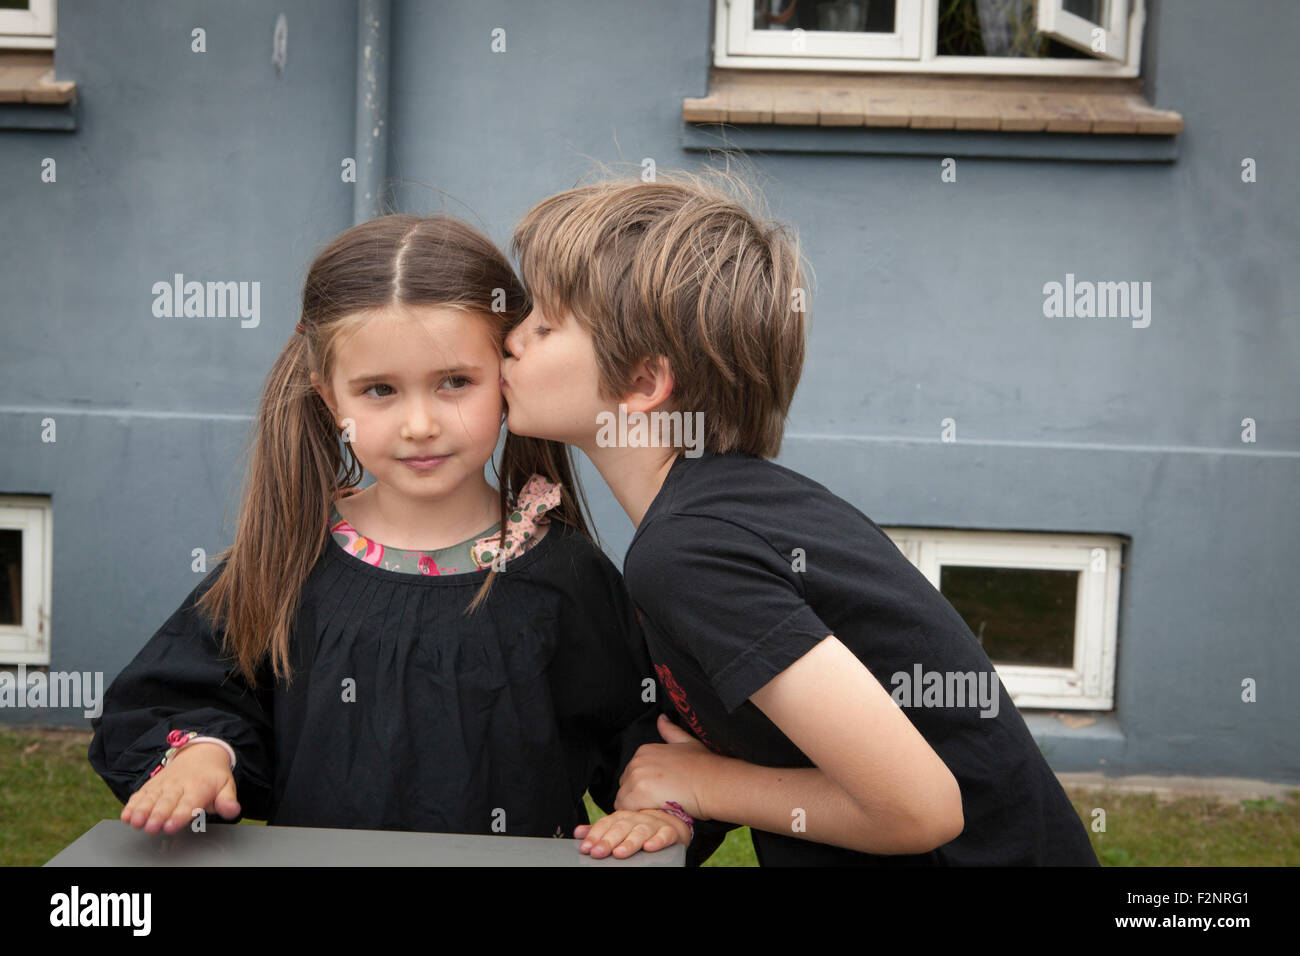 Caucasian boy kissing sister in backyard Stock Photo